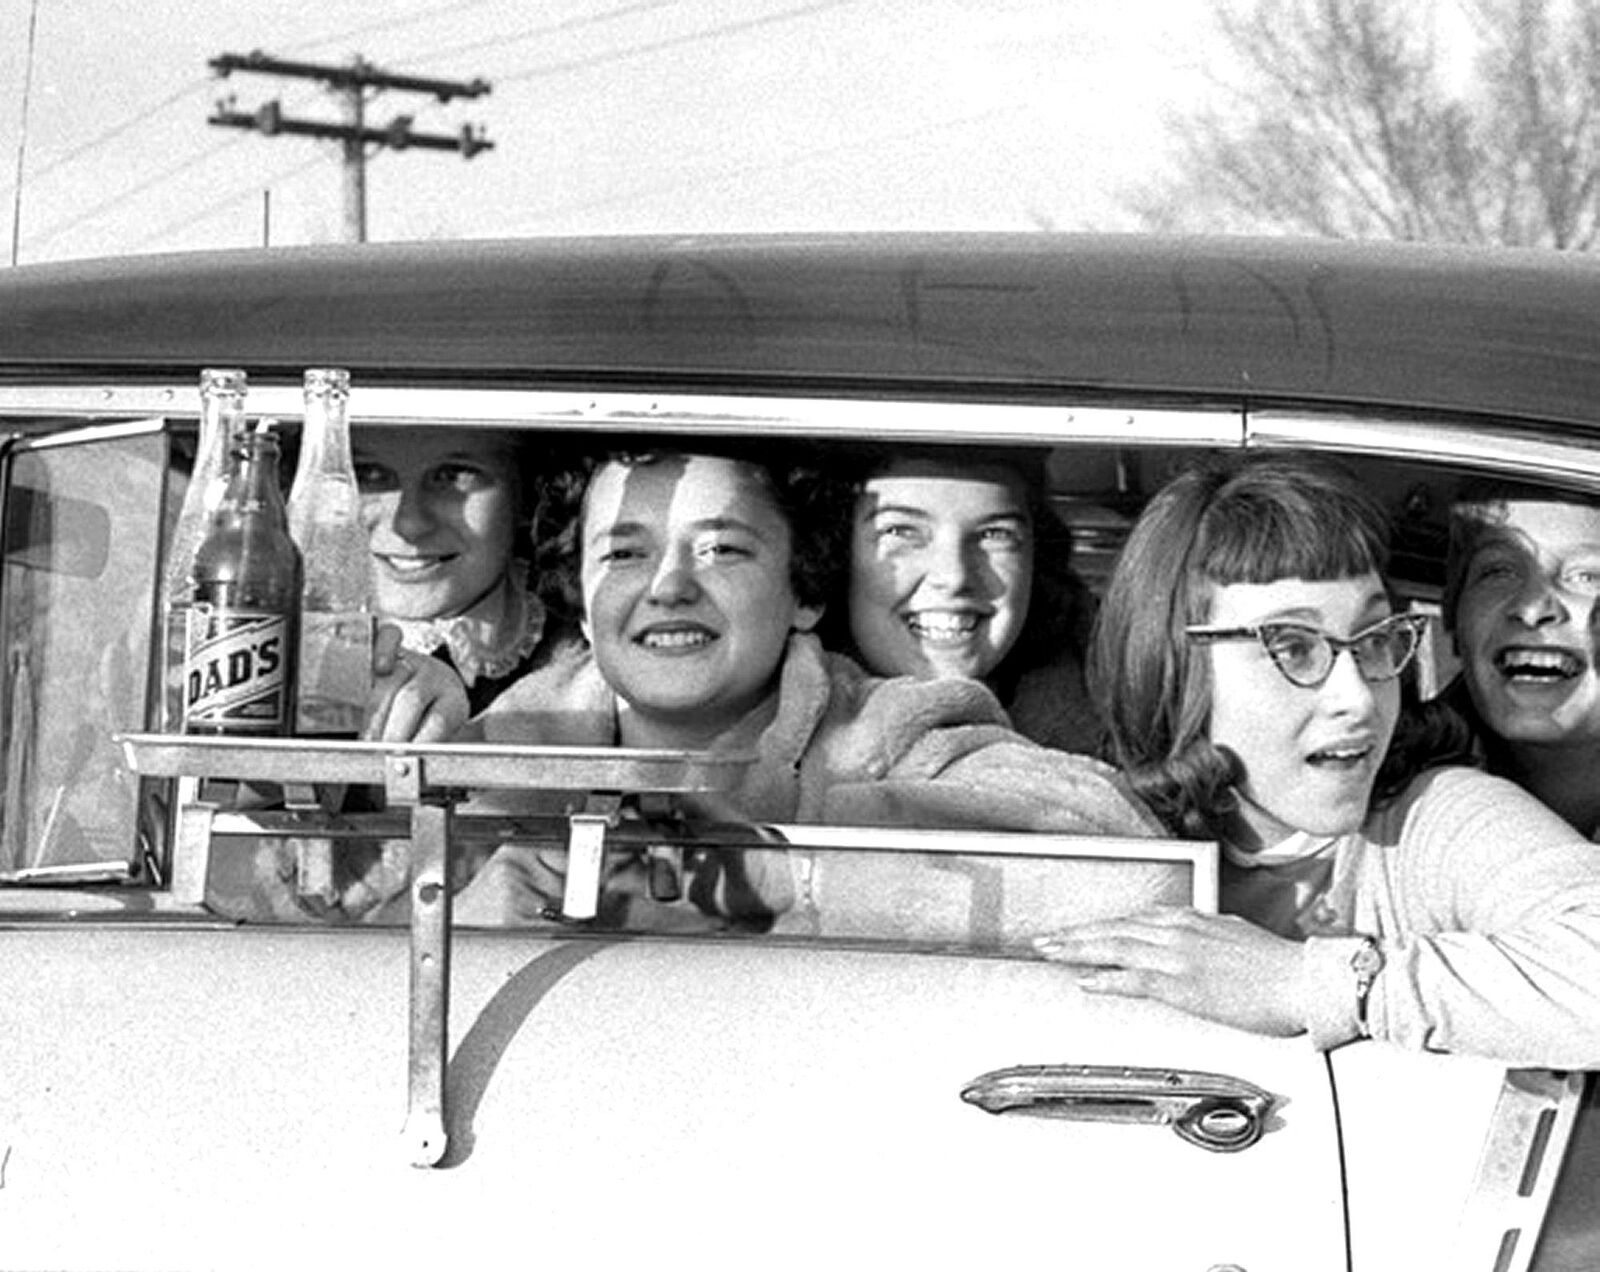 1956 HAMBURGER STAND GIRLS  in Car PHOTO (174-u)